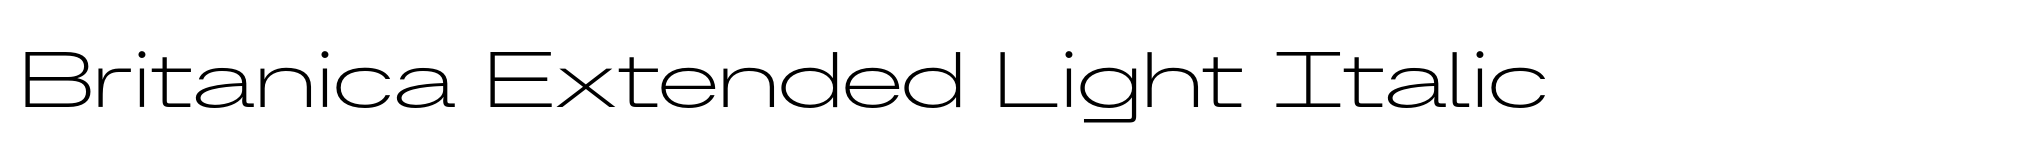 Britanica Extended Light Italic image